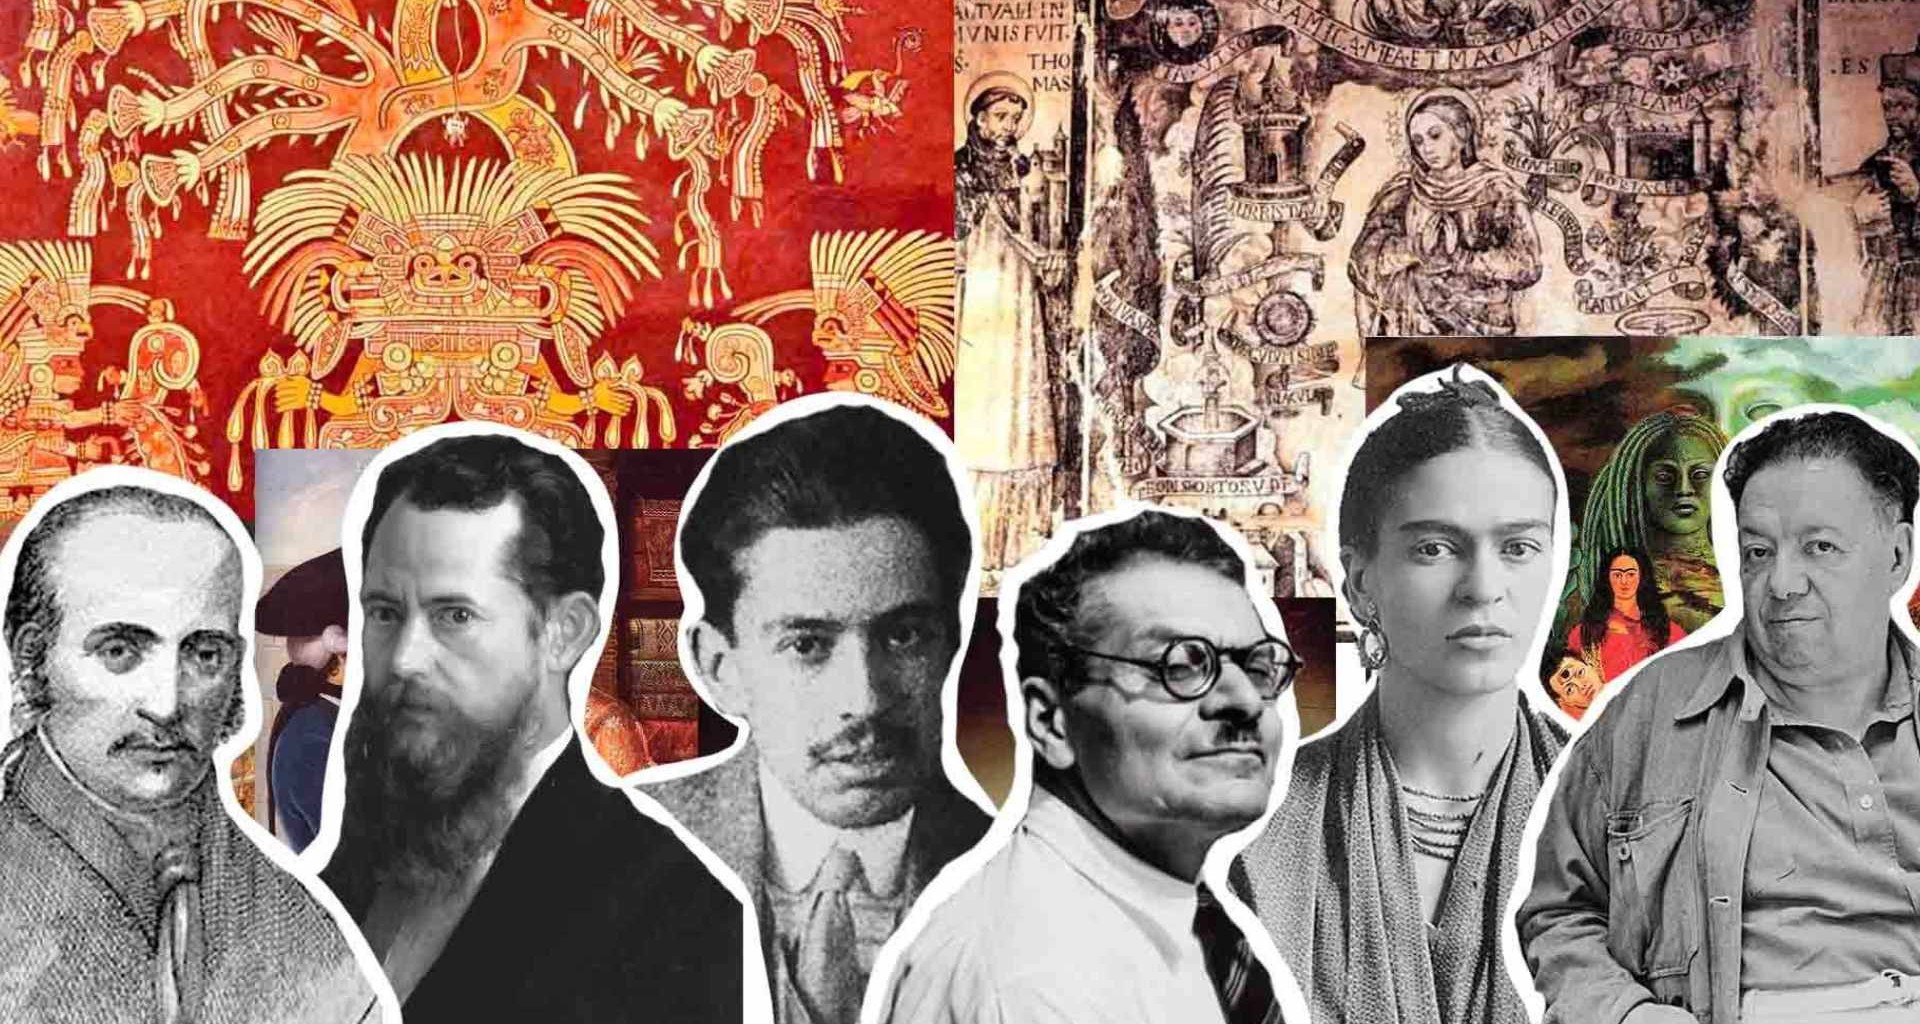 ¡La historia de México en pinturas! De la prehispanidad a Frida Kalho